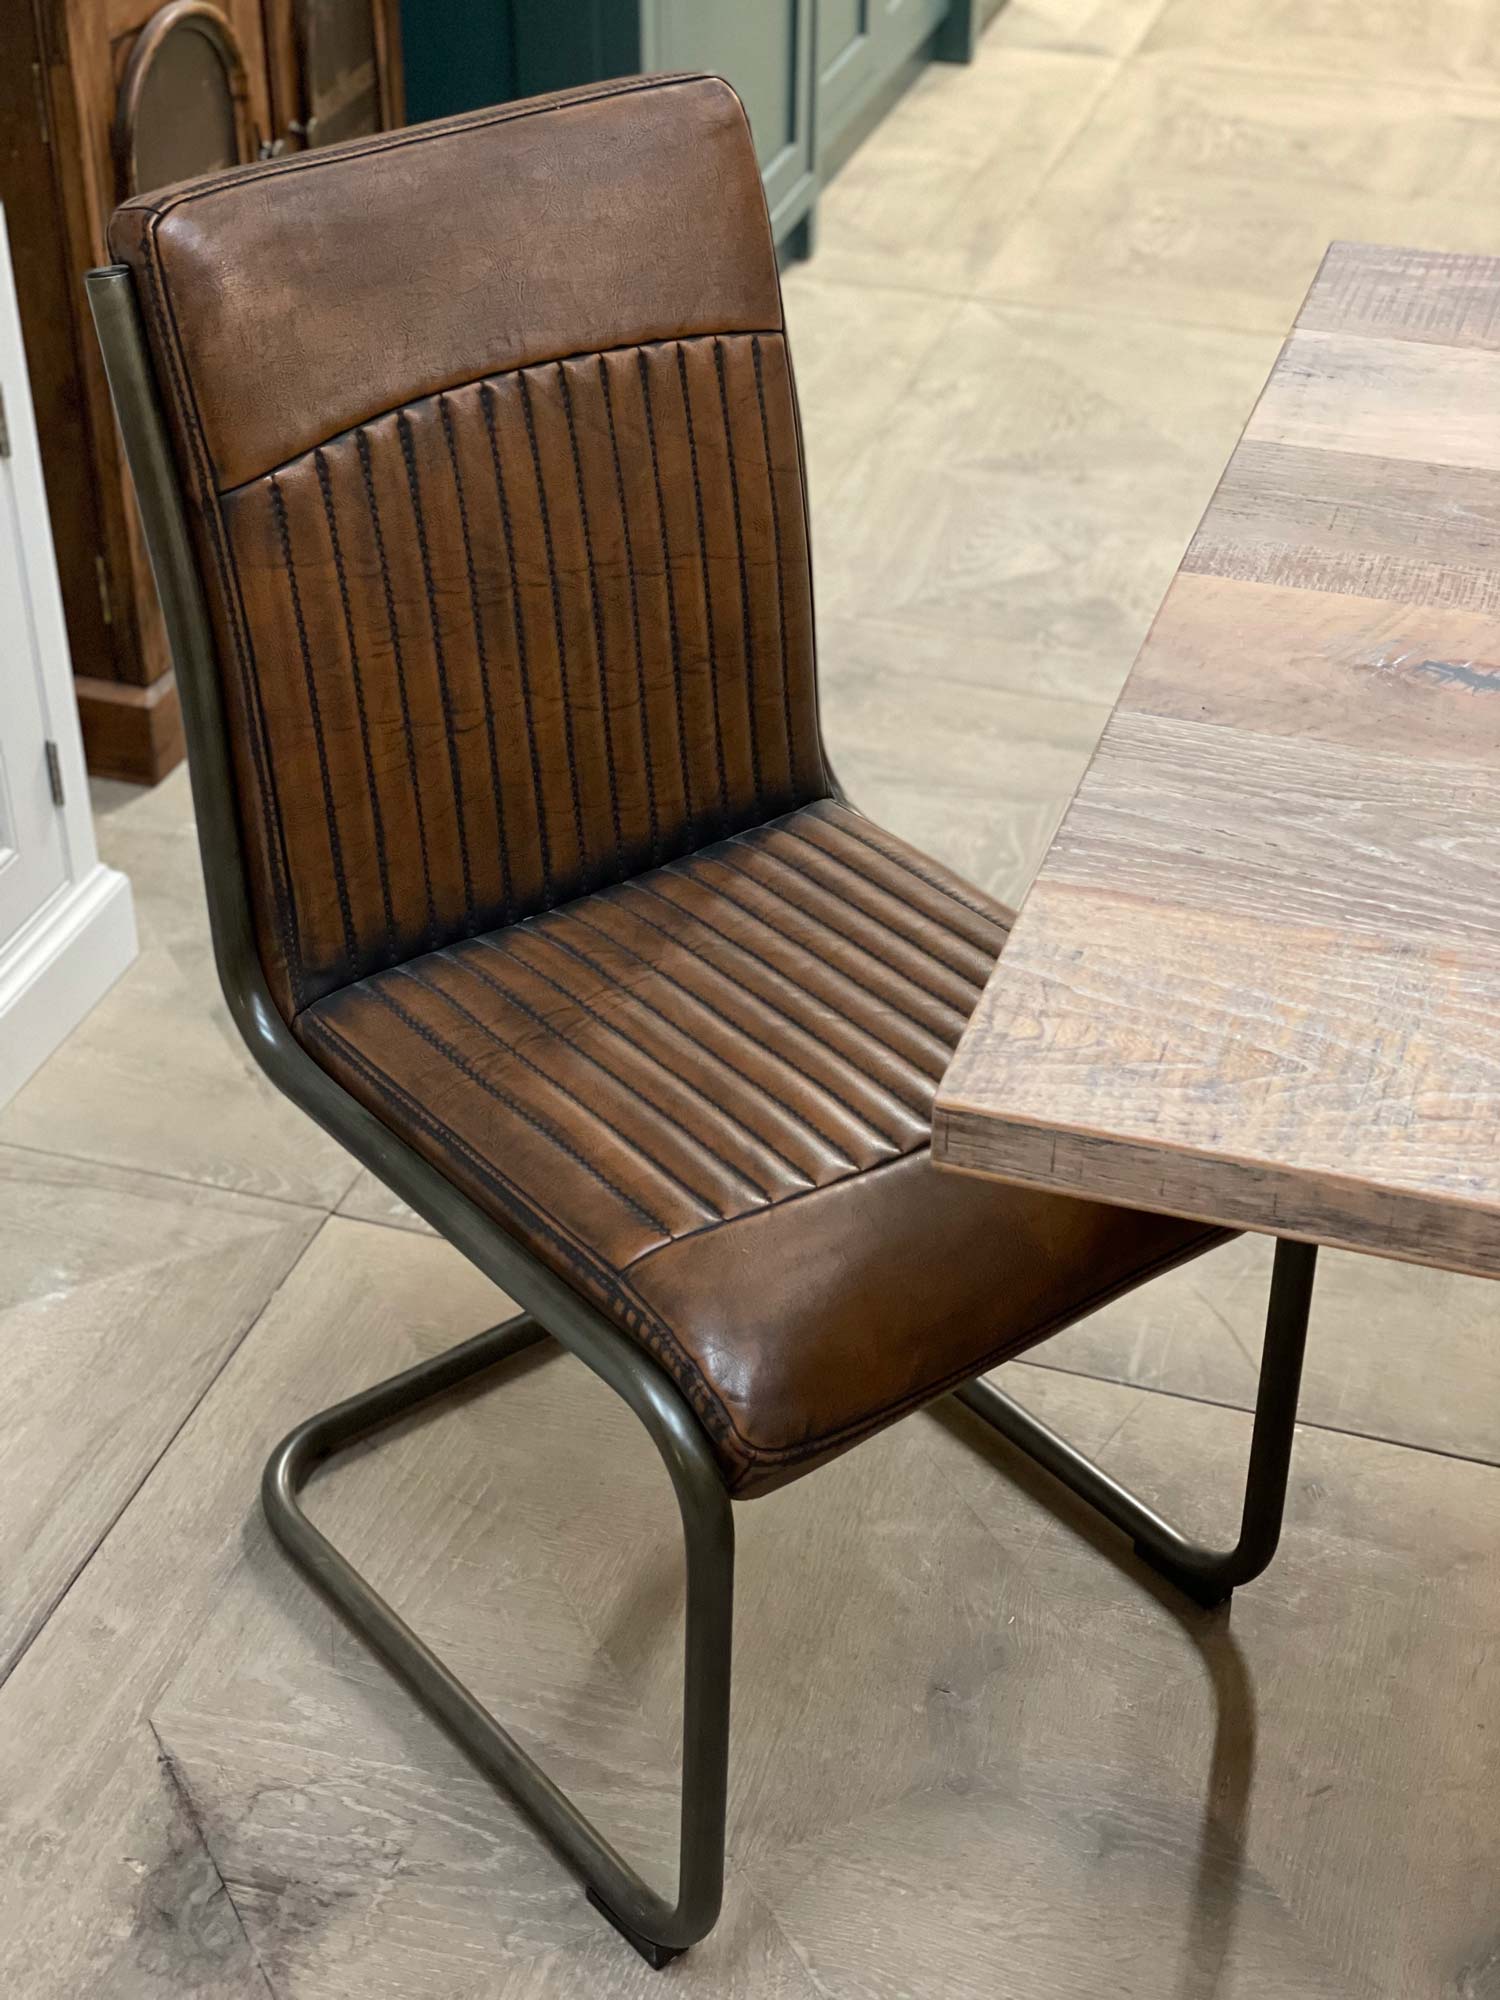 Brown industrial chair